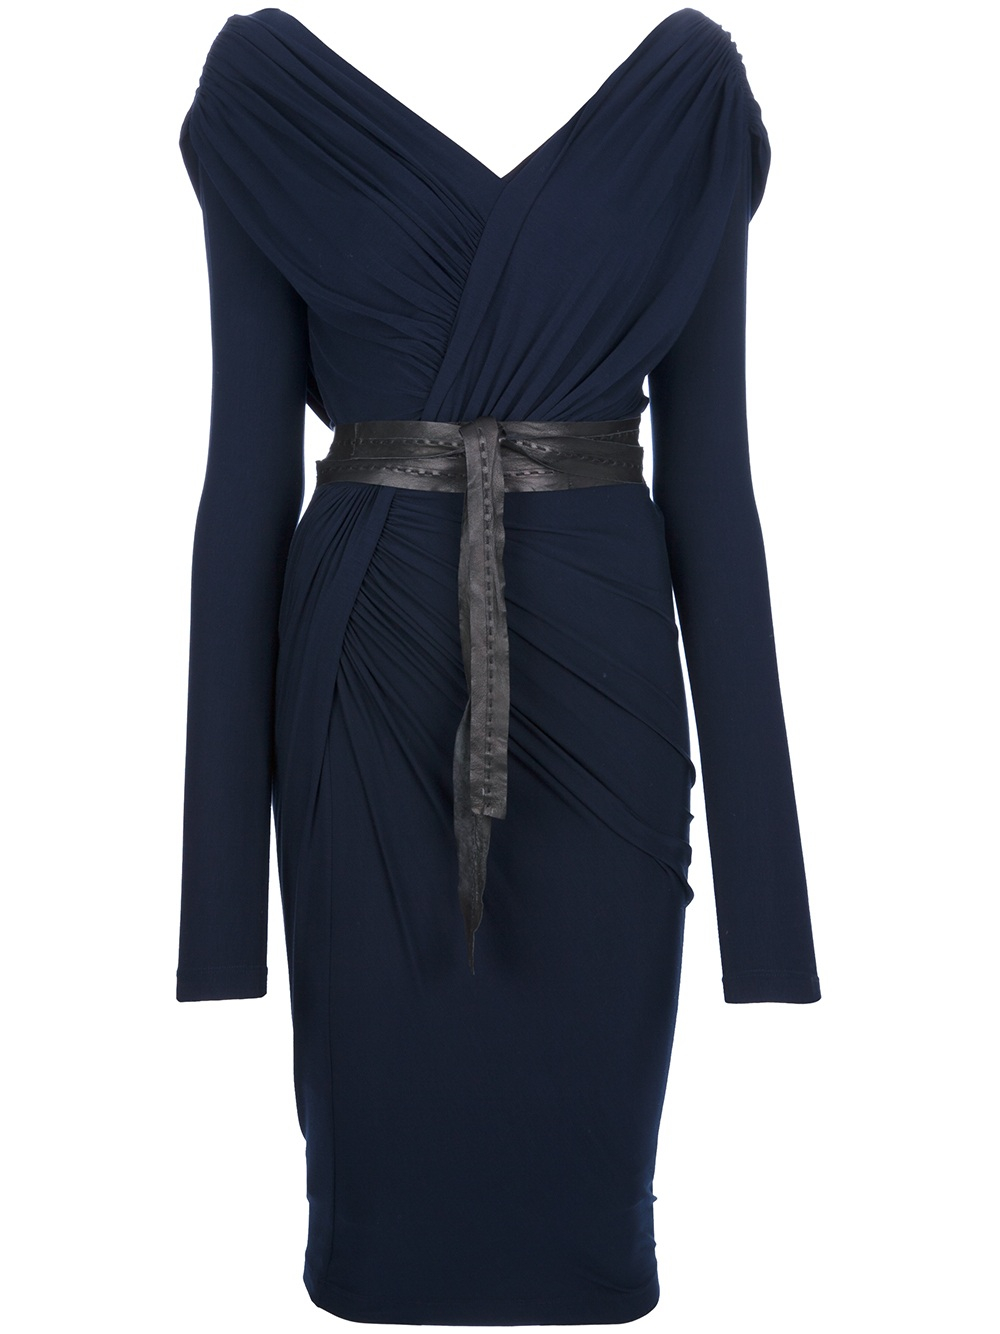 Lyst - Donna Karan Belted Wrap Dress in Blue